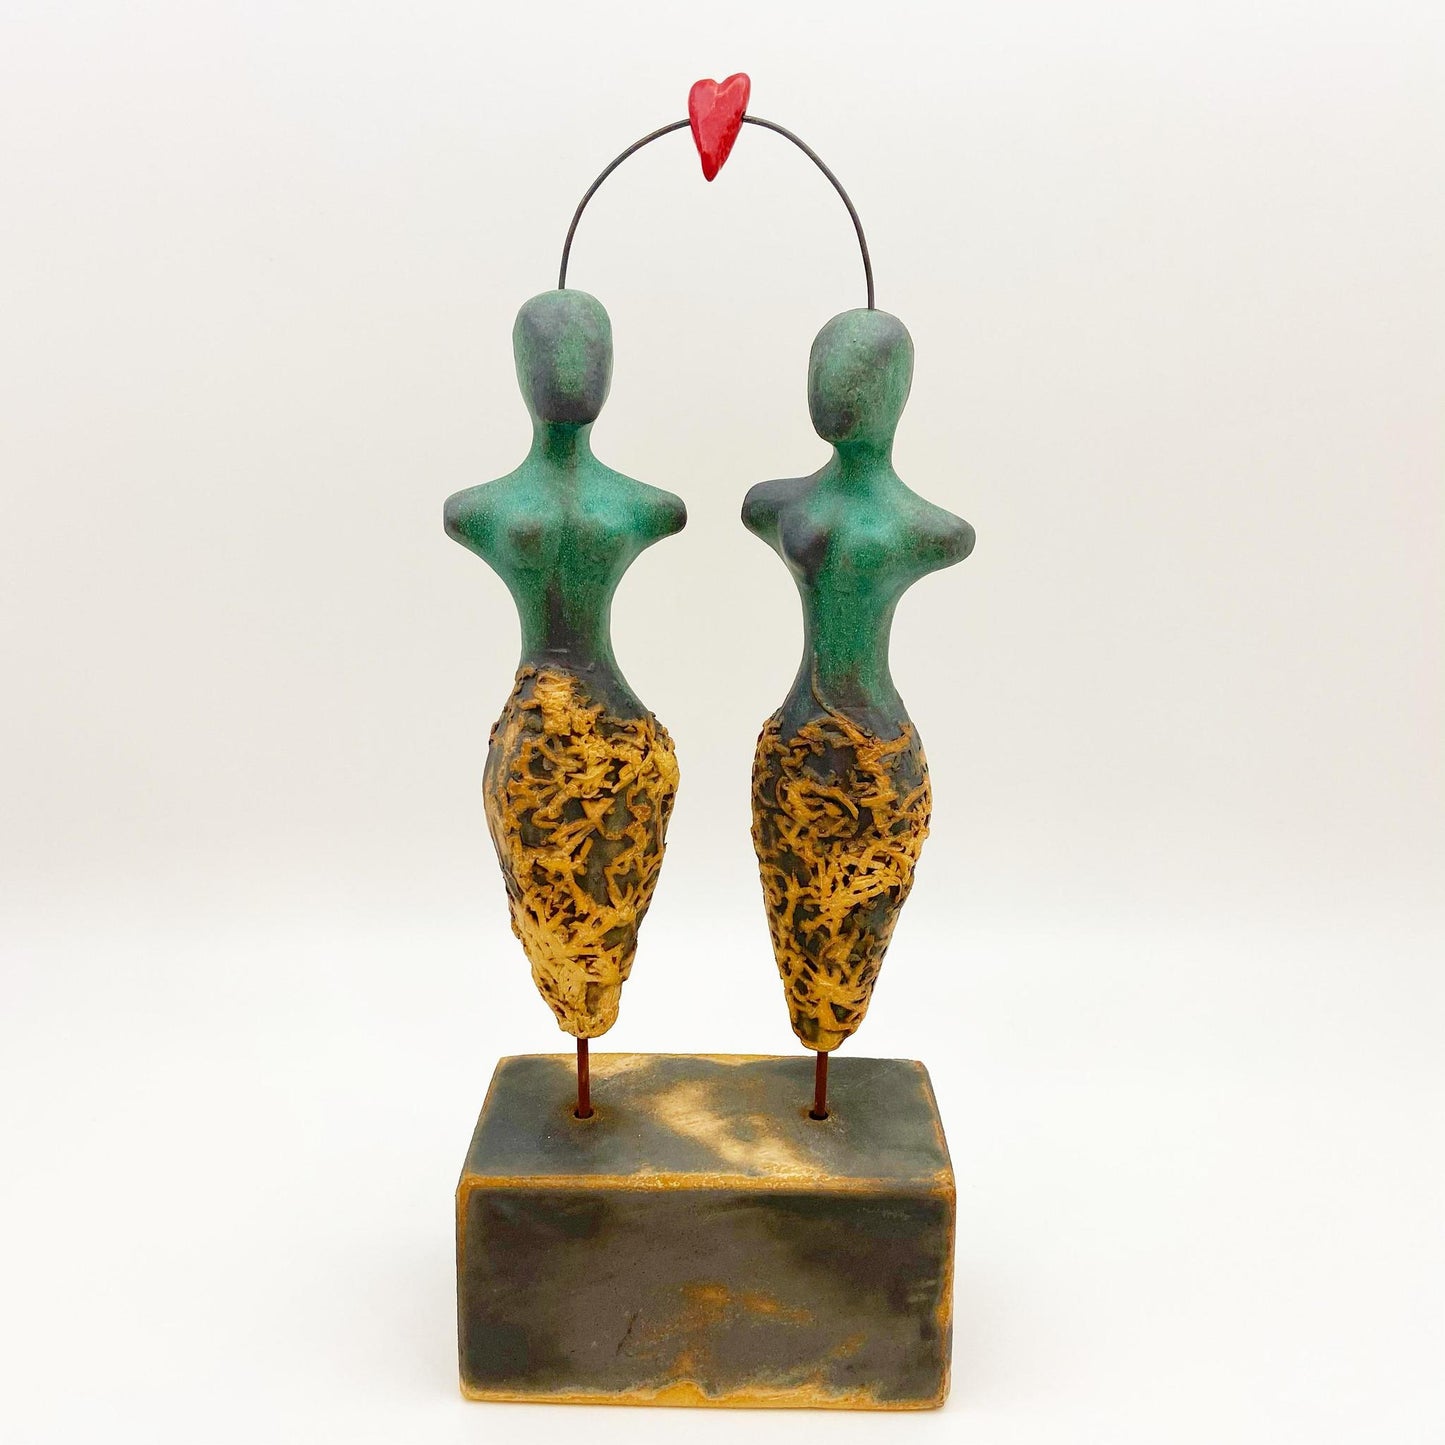 Sculpture - Love Connection Series - Ceramic